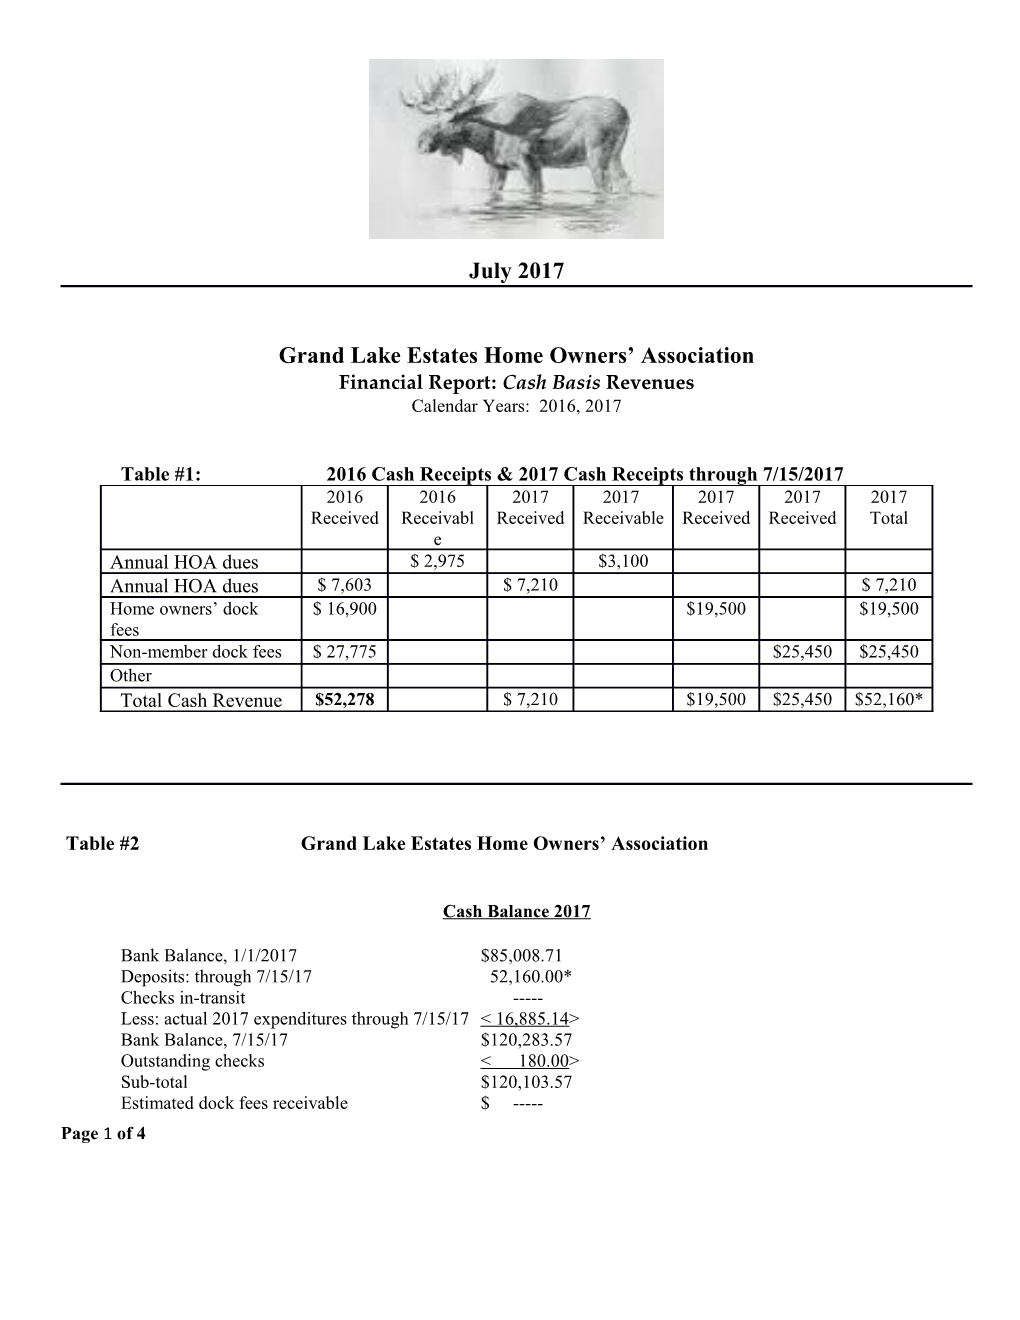 Grand Lake Estates Home Owners Association